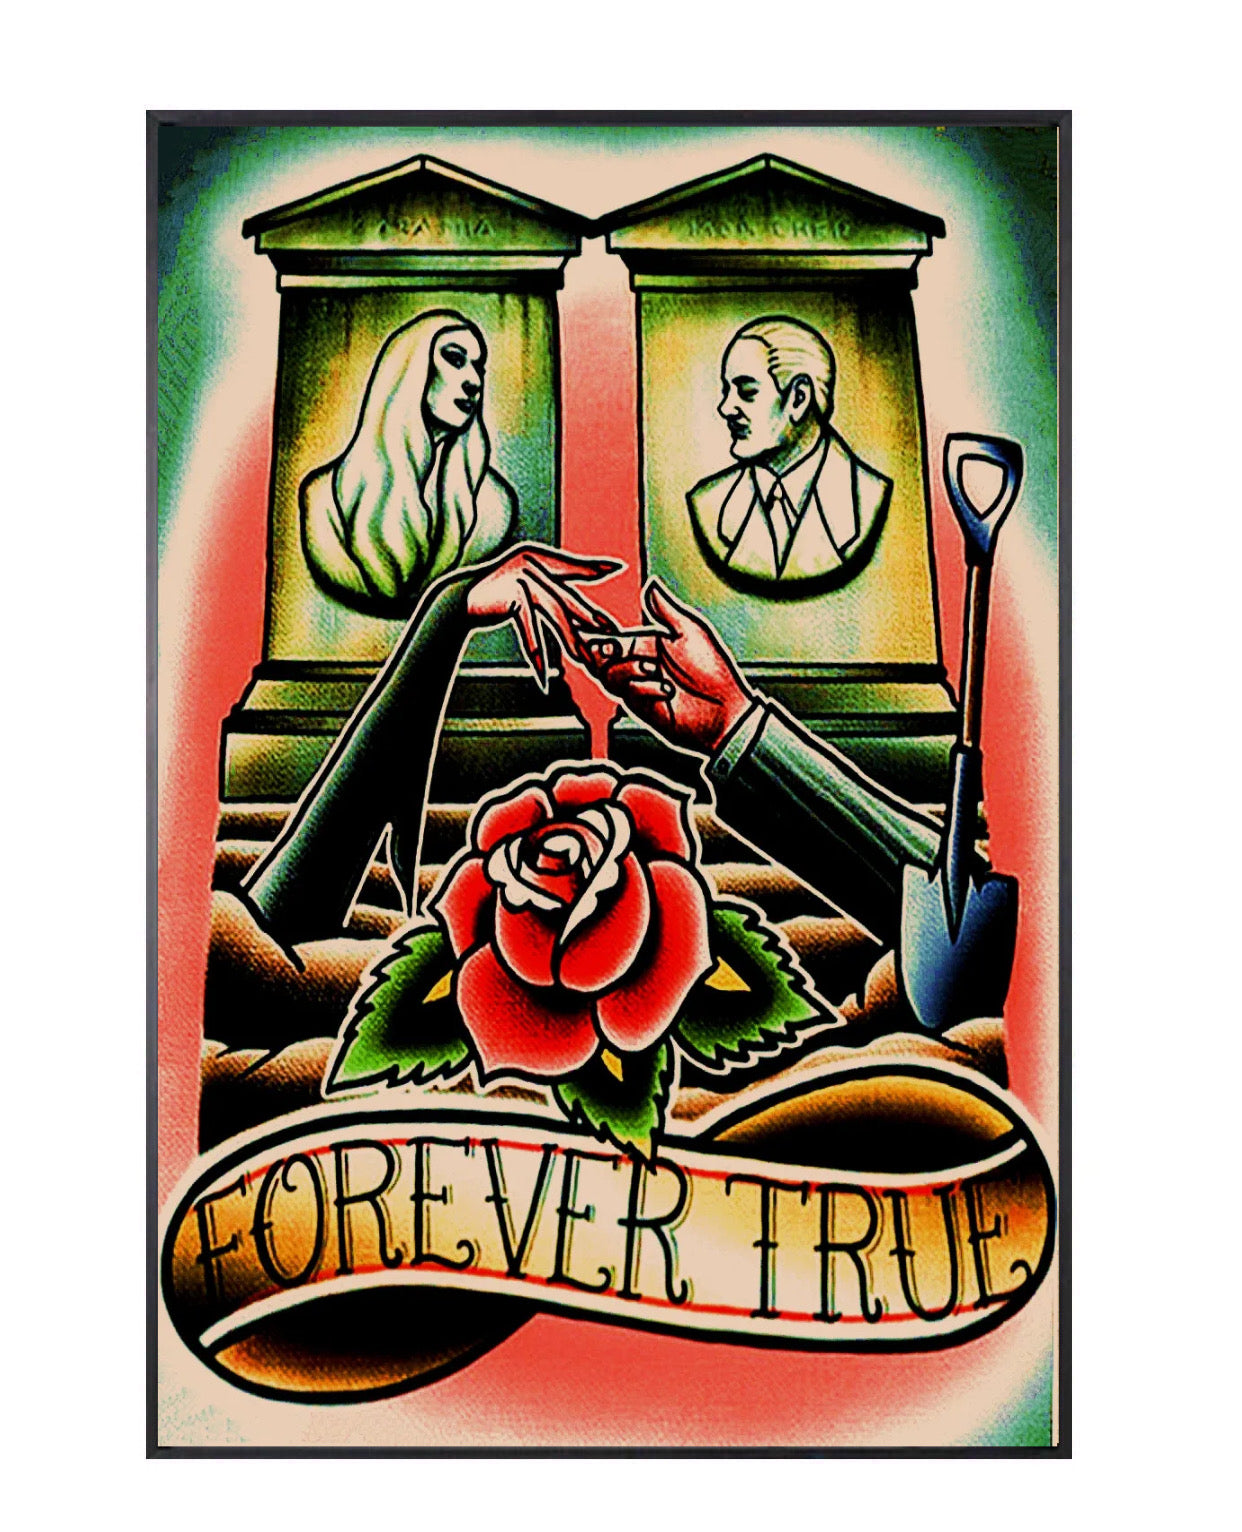 "forever true" tattoo poster